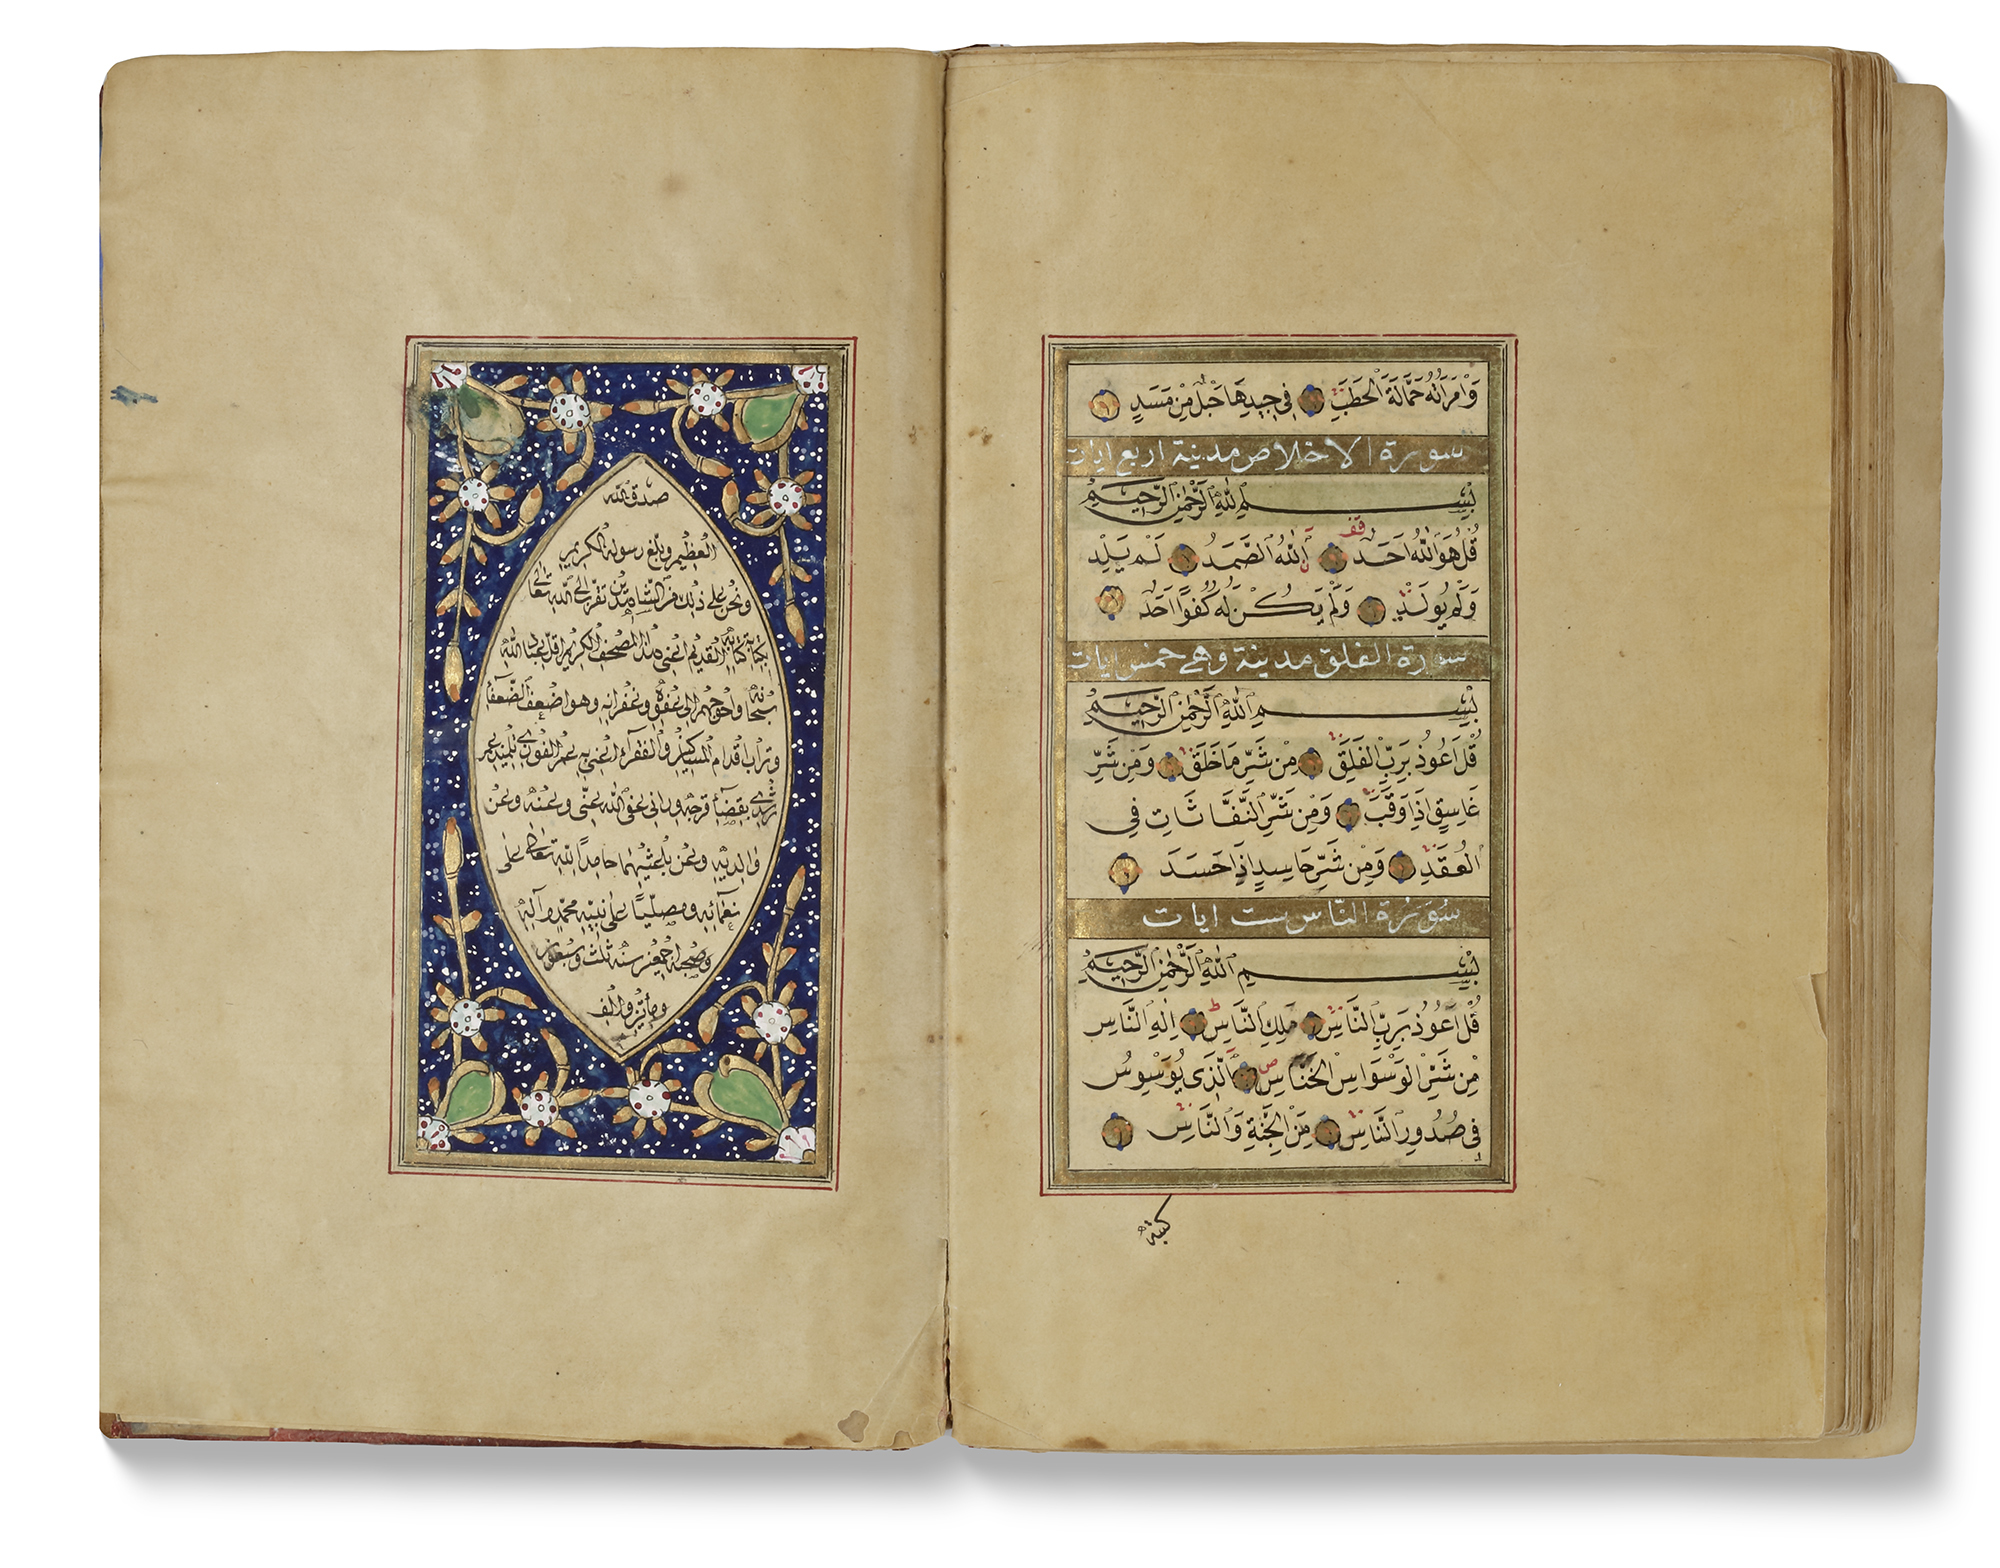 A FINE OTTOMAN QURAN, TURKEY, WRITTEN BY OMAR AL-FAWRABI STUDENT OF OMAR RUSHDI, DATED 1273 AH/1856 - Image 17 of 20